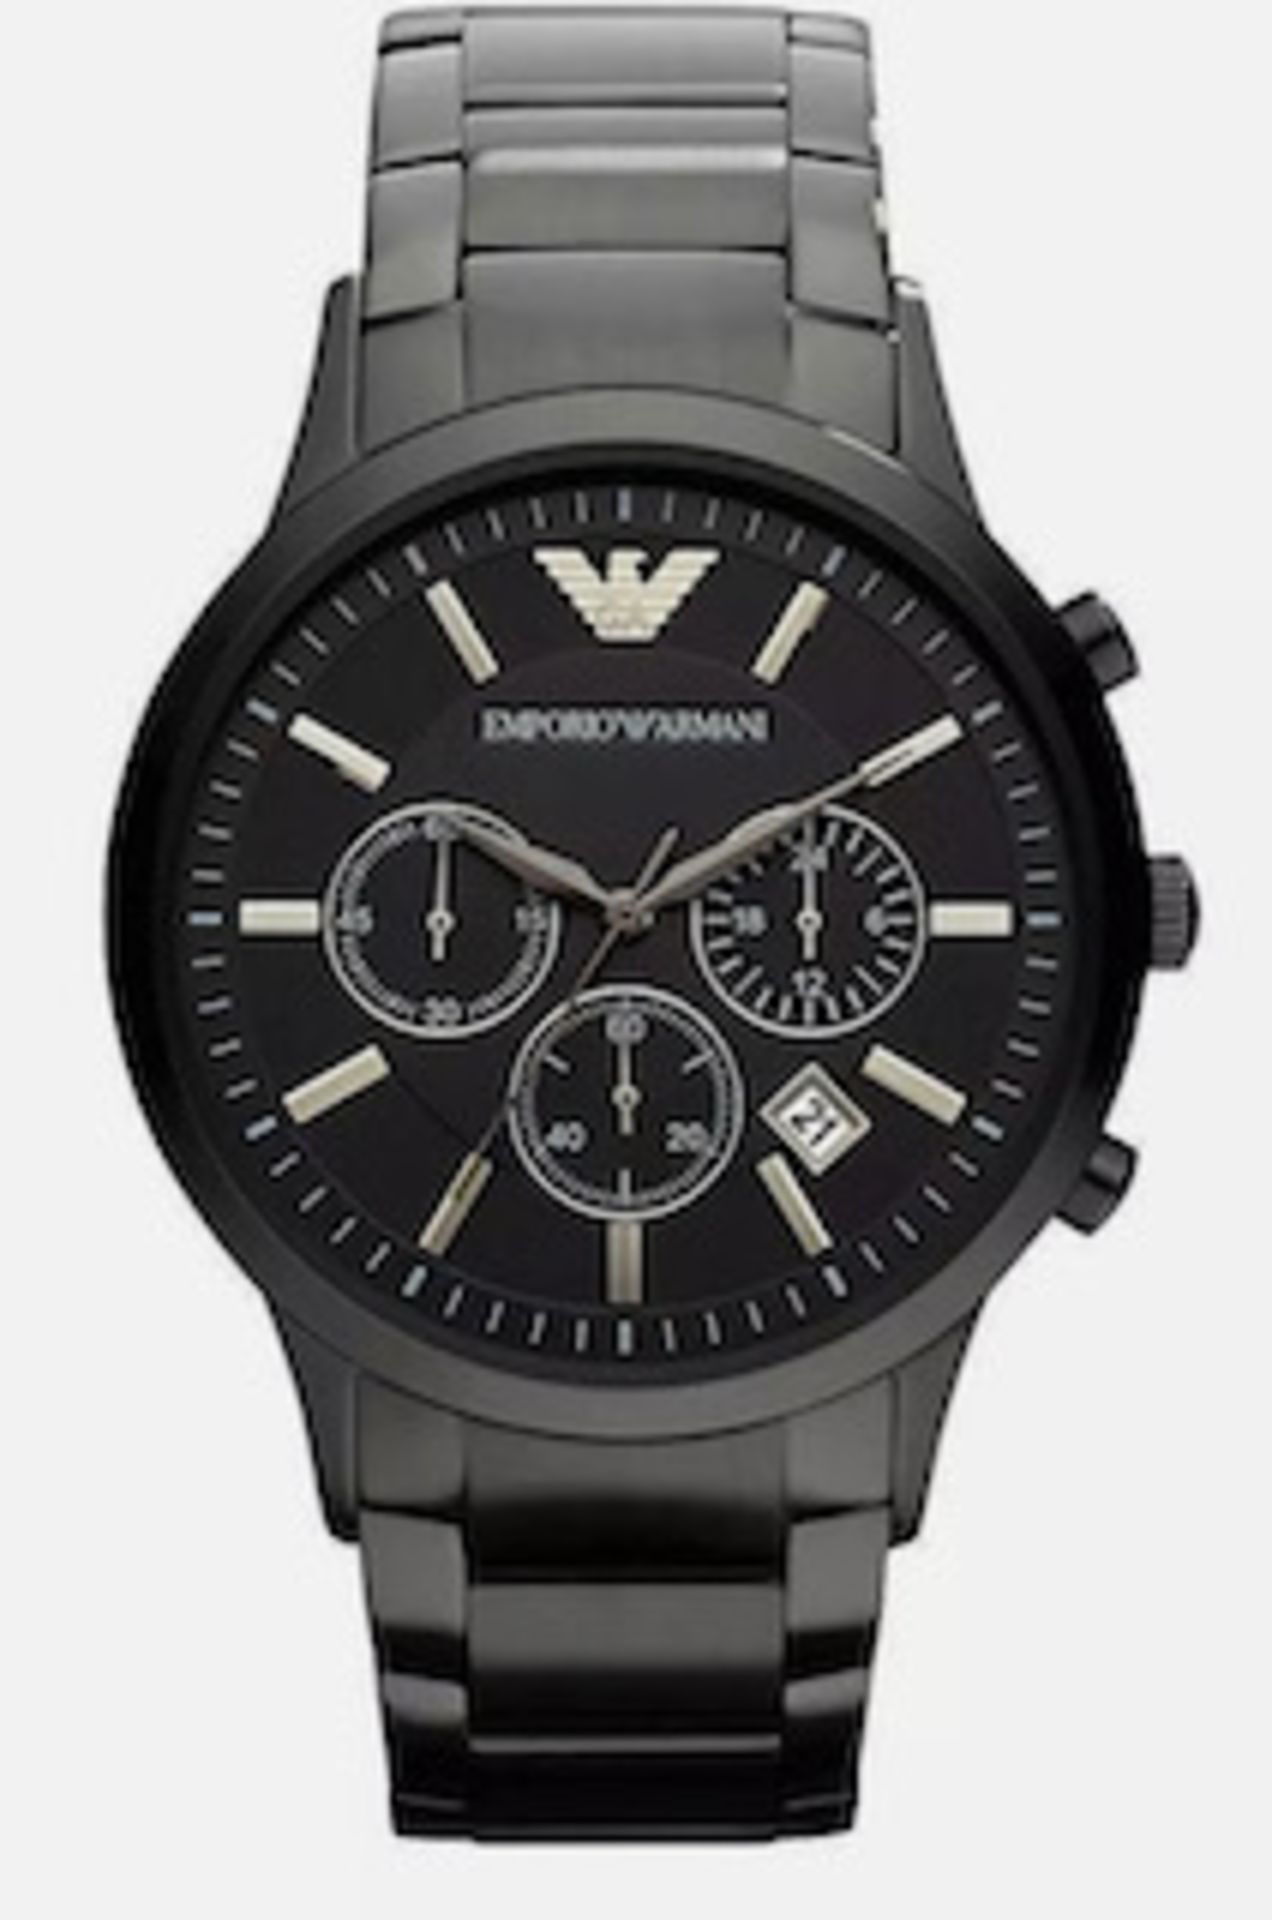 Emporio Armani AR2453 Men's Black Stainless Steel Bracelet Chronograph Watch